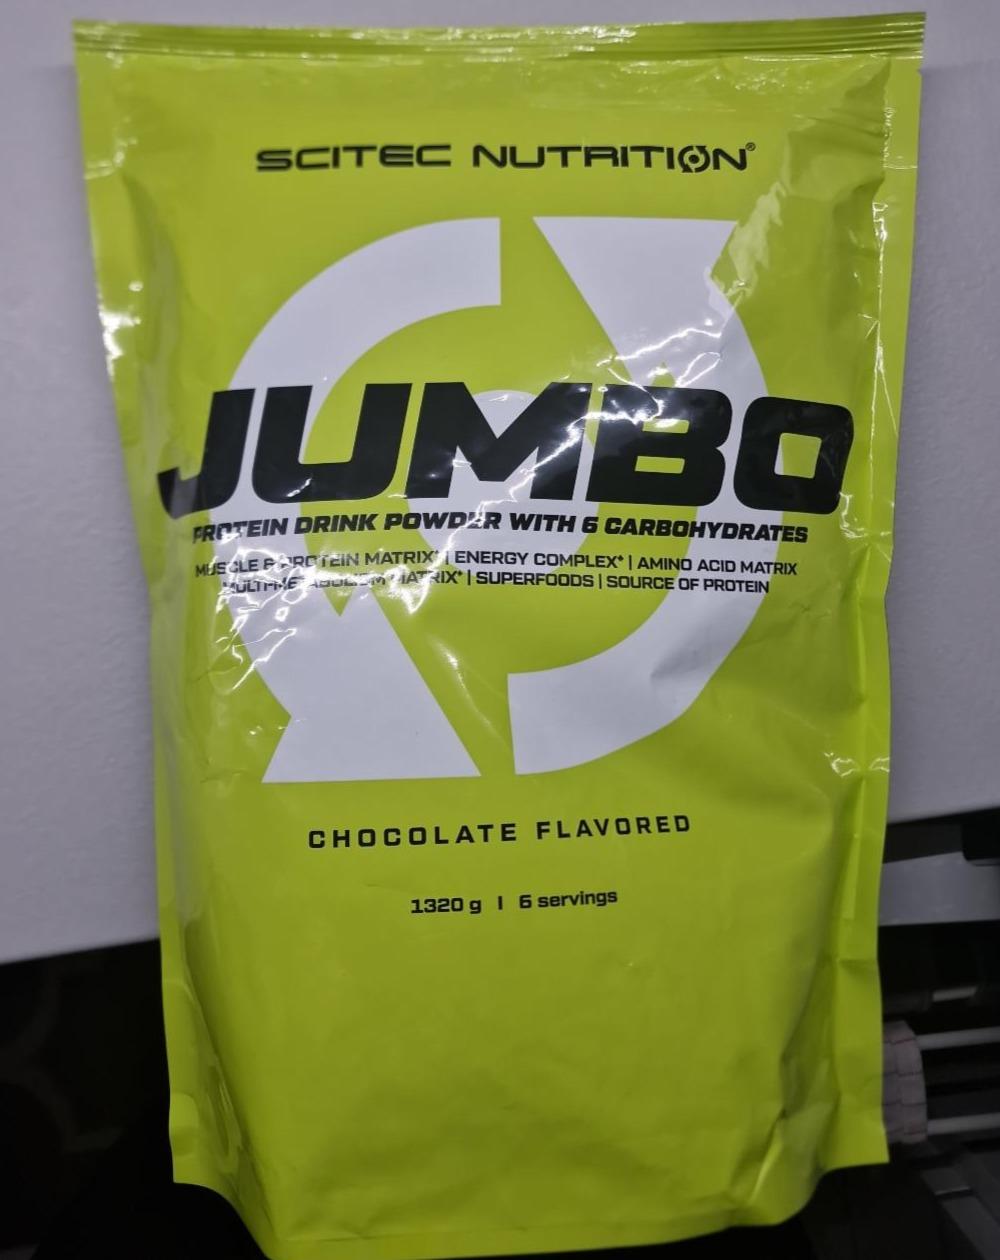 Fotografie - Jumbo protein drink powder Chocolate flavored Scitec Nutrition